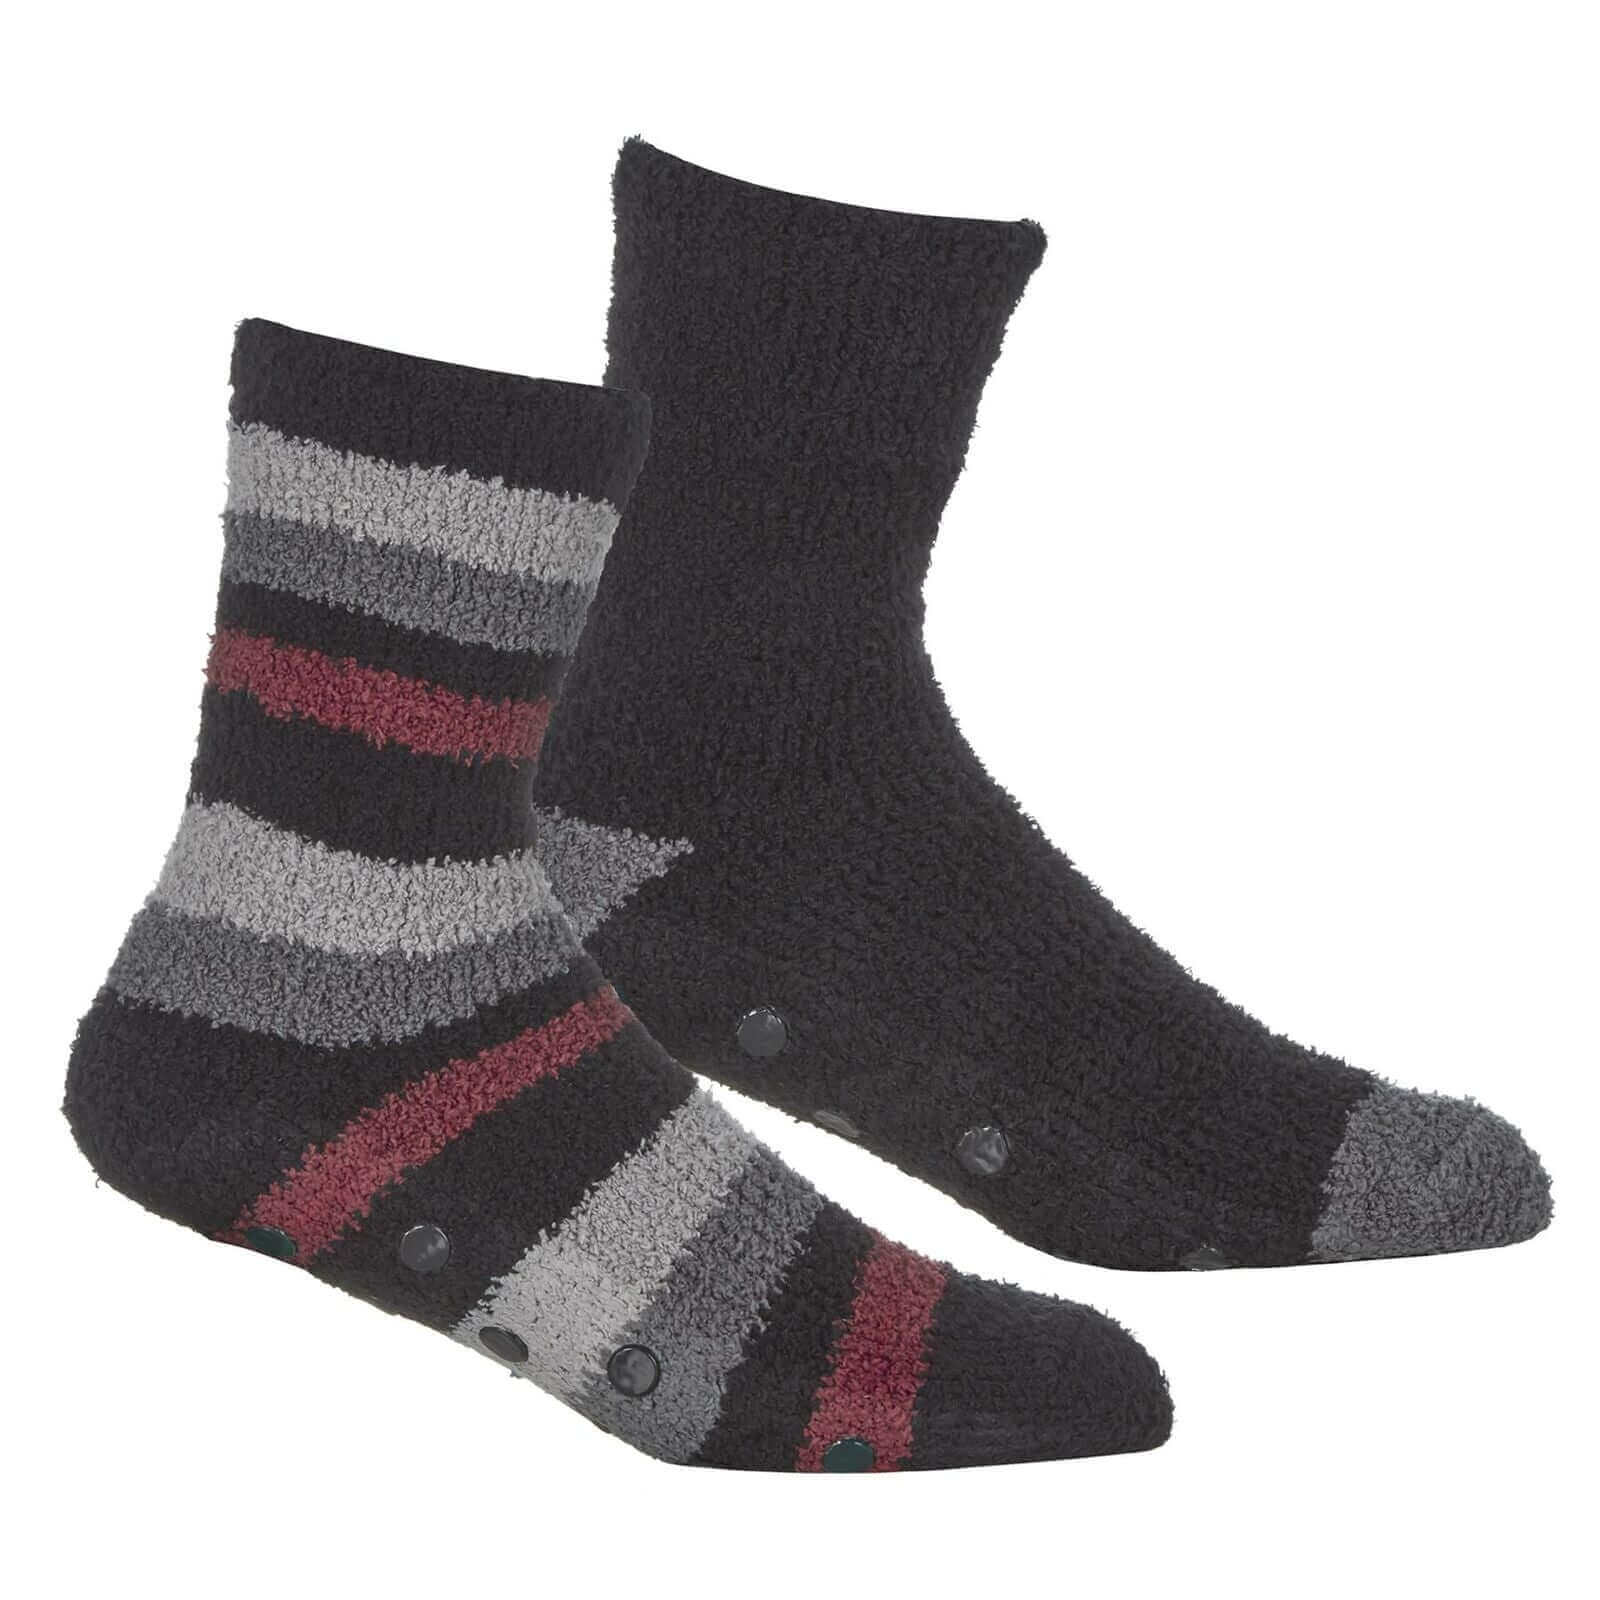 4 Pairs Of Men's Striped Fluffy Slipper Socks, Non-Skid Gripper Sock Winter Gift. Buy now for £9.00. A Socks by Sock Stack. 6-11, assorted, black, boys, breathable, comfortable, cosy, elastane, fleece, fluffy, gift, grey, grip, home, mens, mens socks, mul